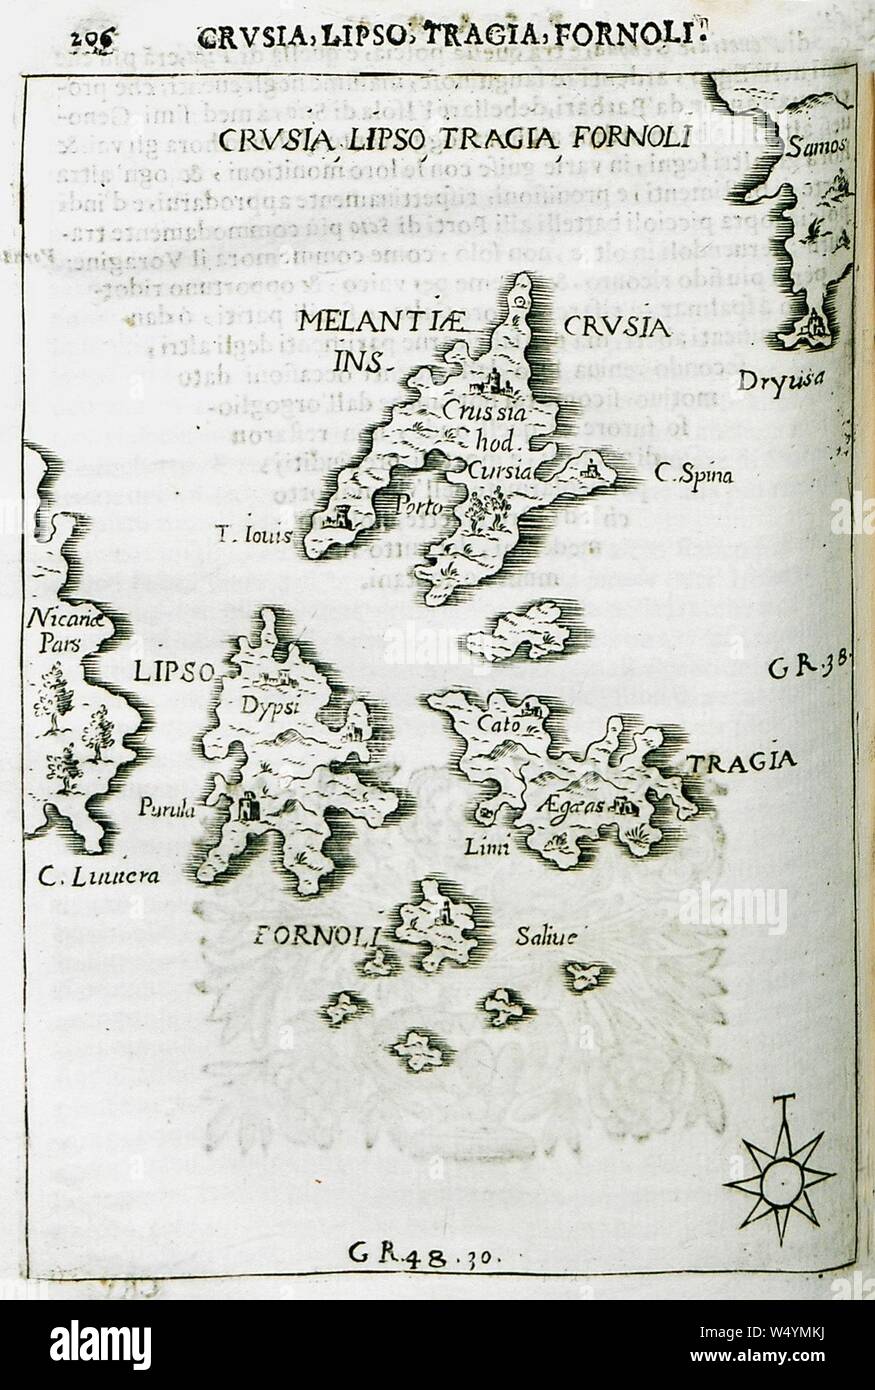 Crusia, Lipso, Tragia, Fornoli - Piacenza Francesco - 1688. Stock Photo